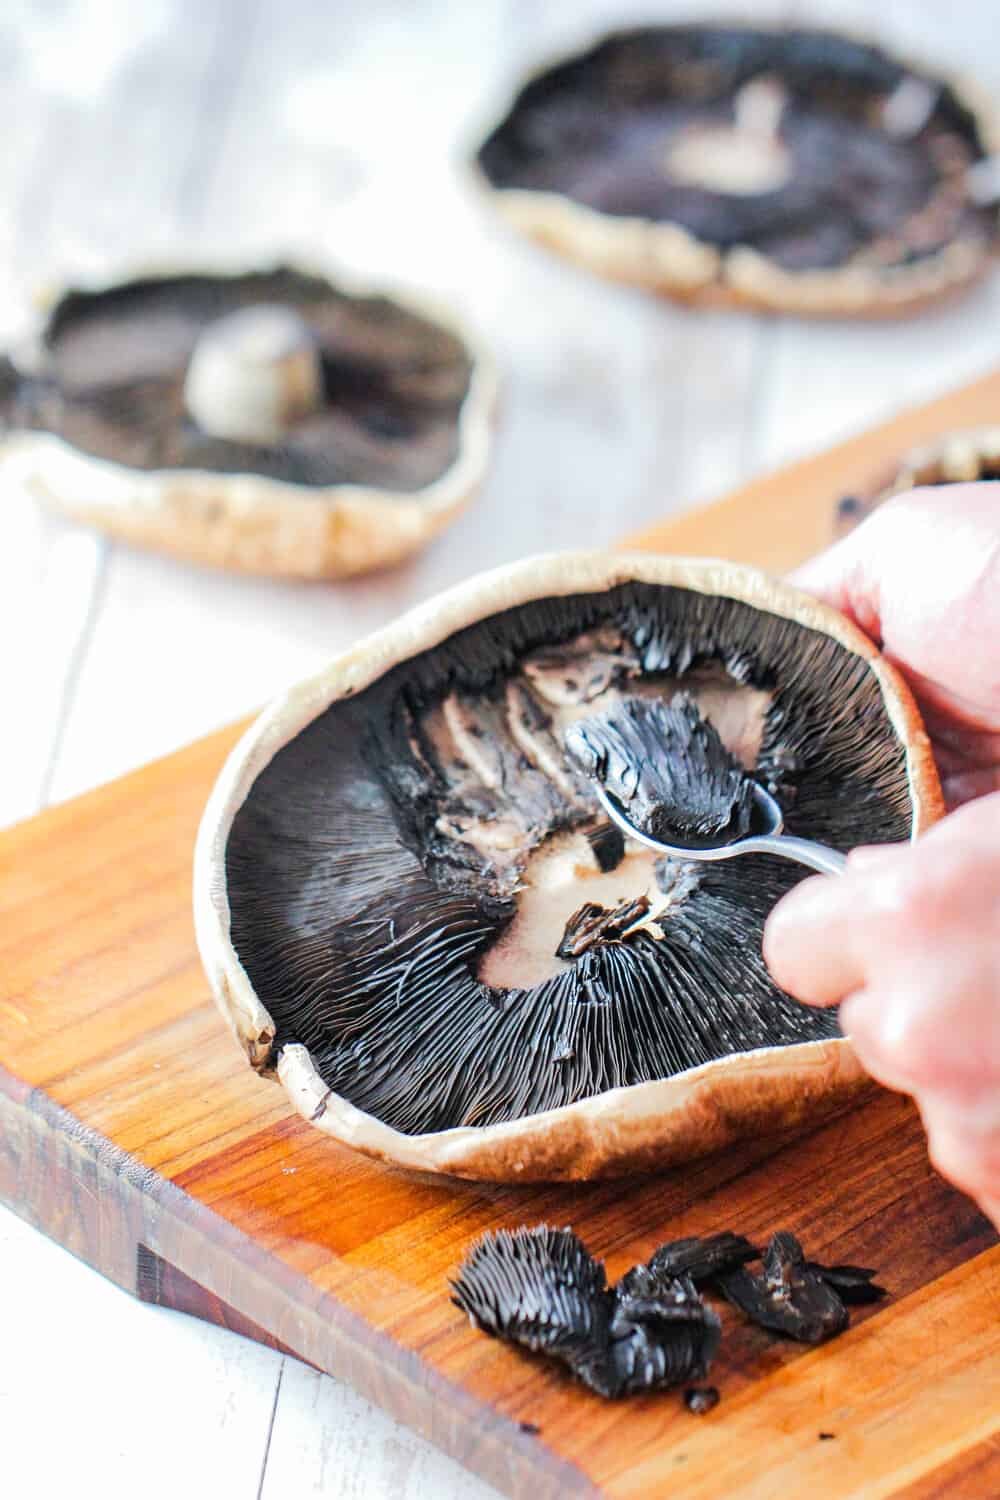 A hand using a spoon to scrape out the gills of a portobello mushroom cap.